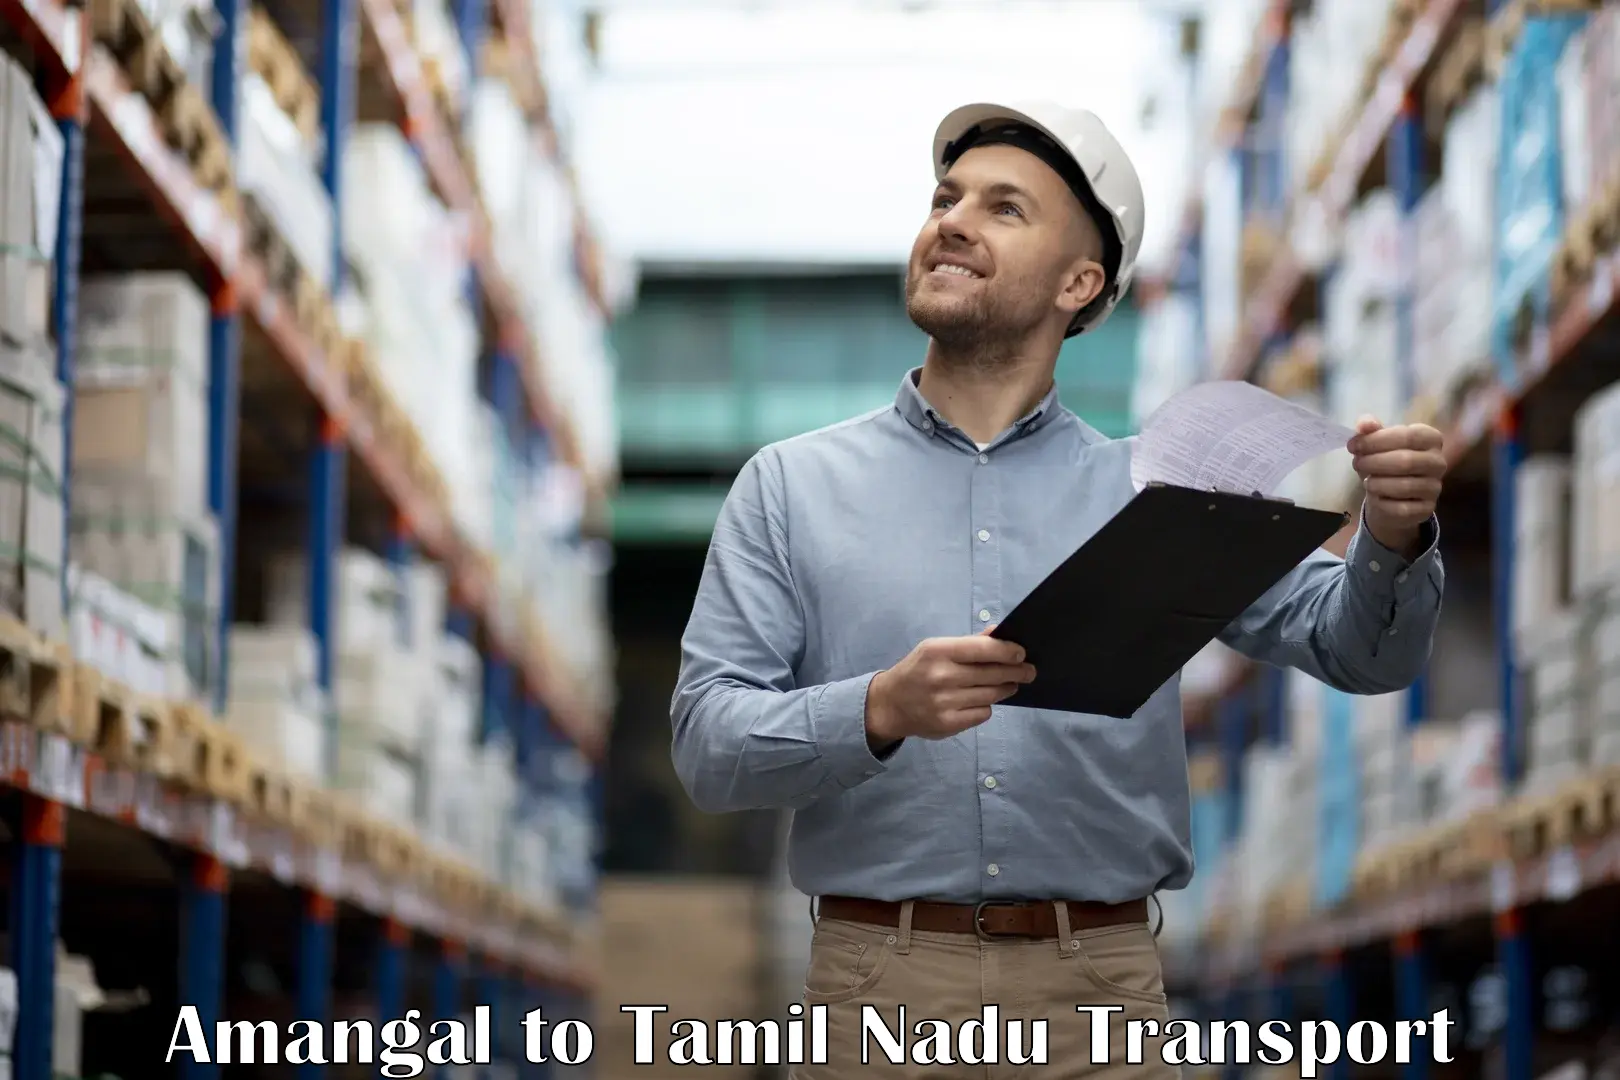 Daily transport service Amangal to Tamil Nadu